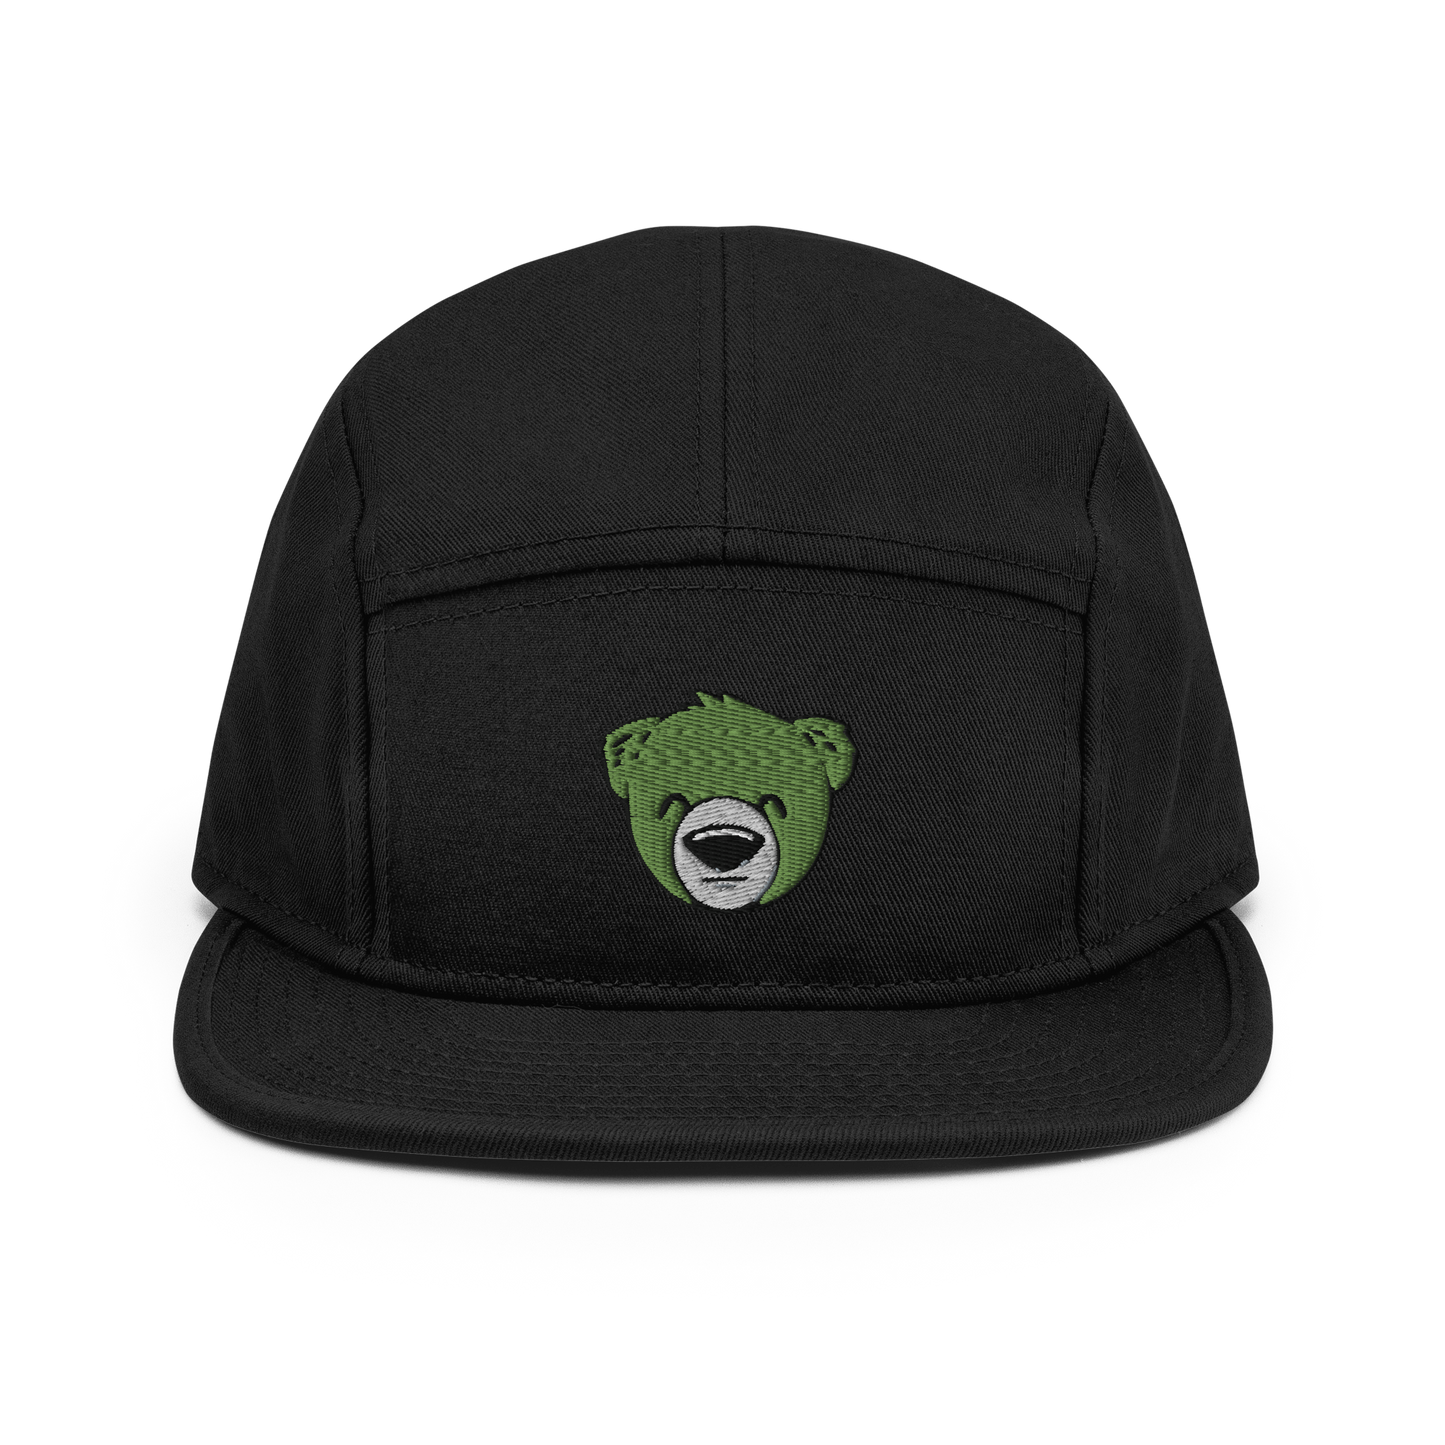 WeBearish Embroidered Camper Cap (Black/Green)